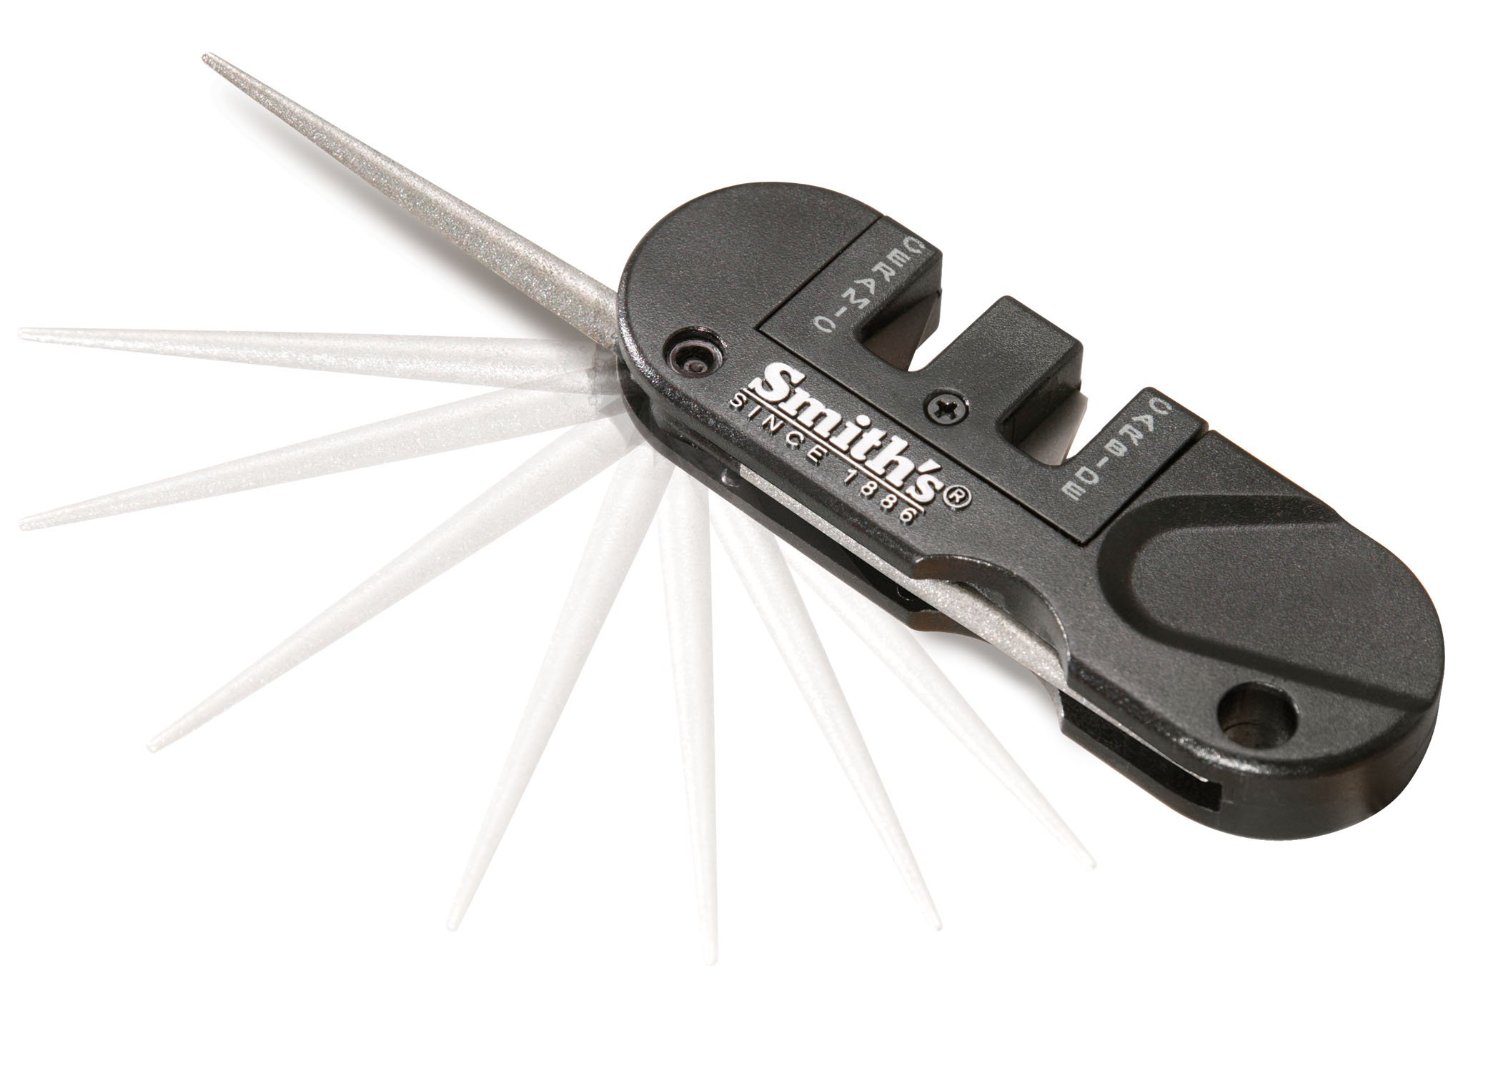 Smiths PP1 Pocket Knife Sharpener Review